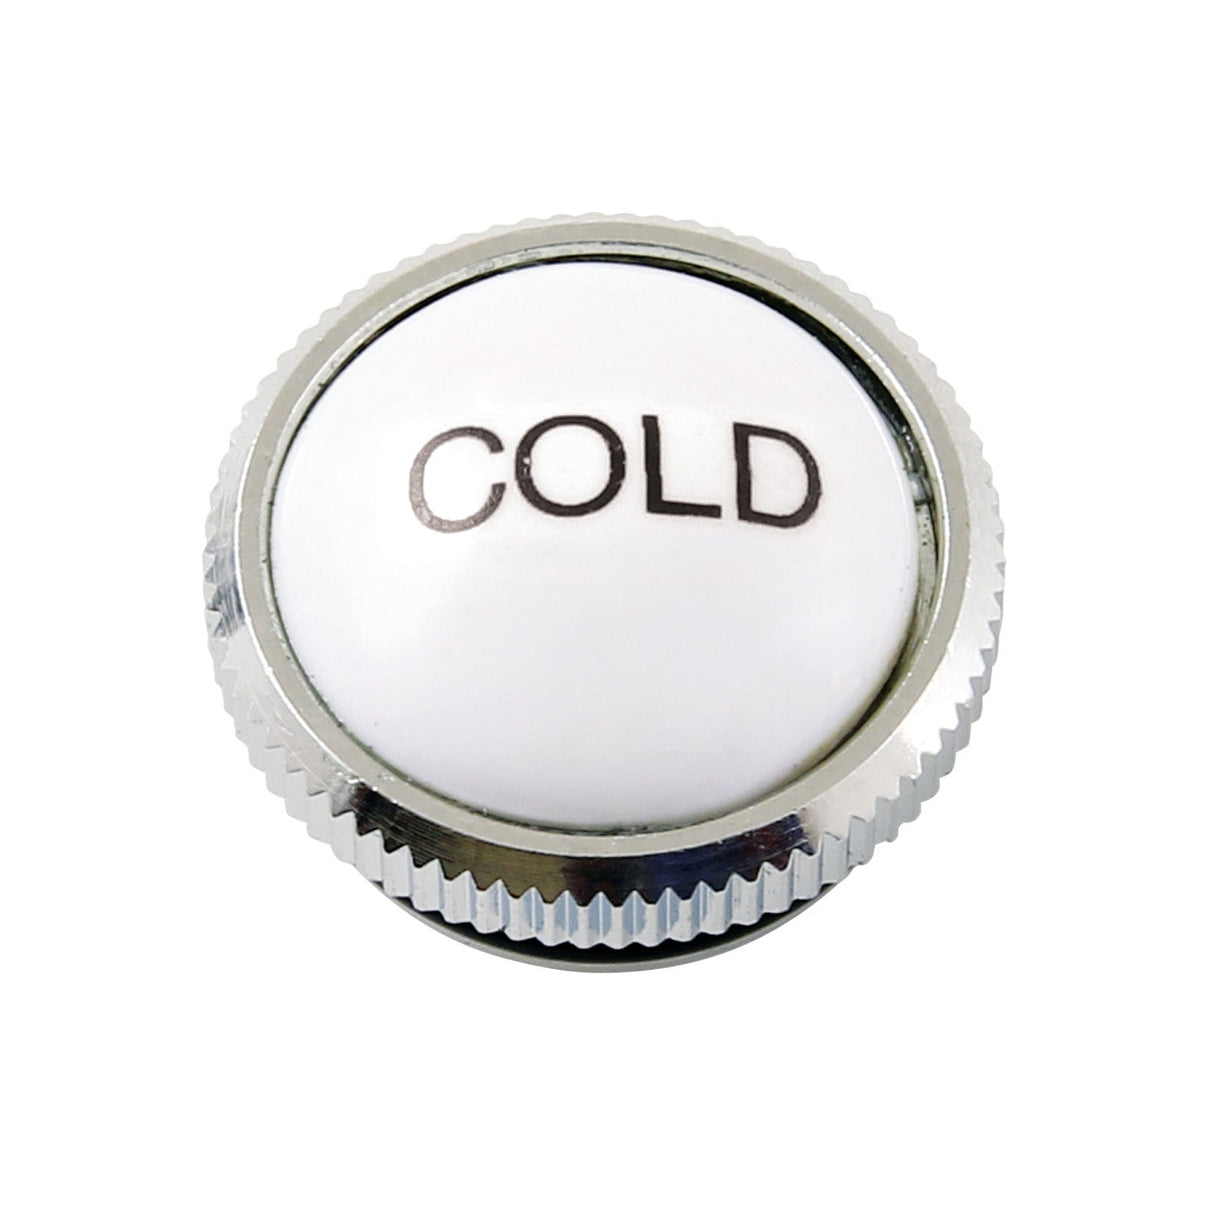 KBHI1791AXC Cold Handle Index Button, Polished Chrome